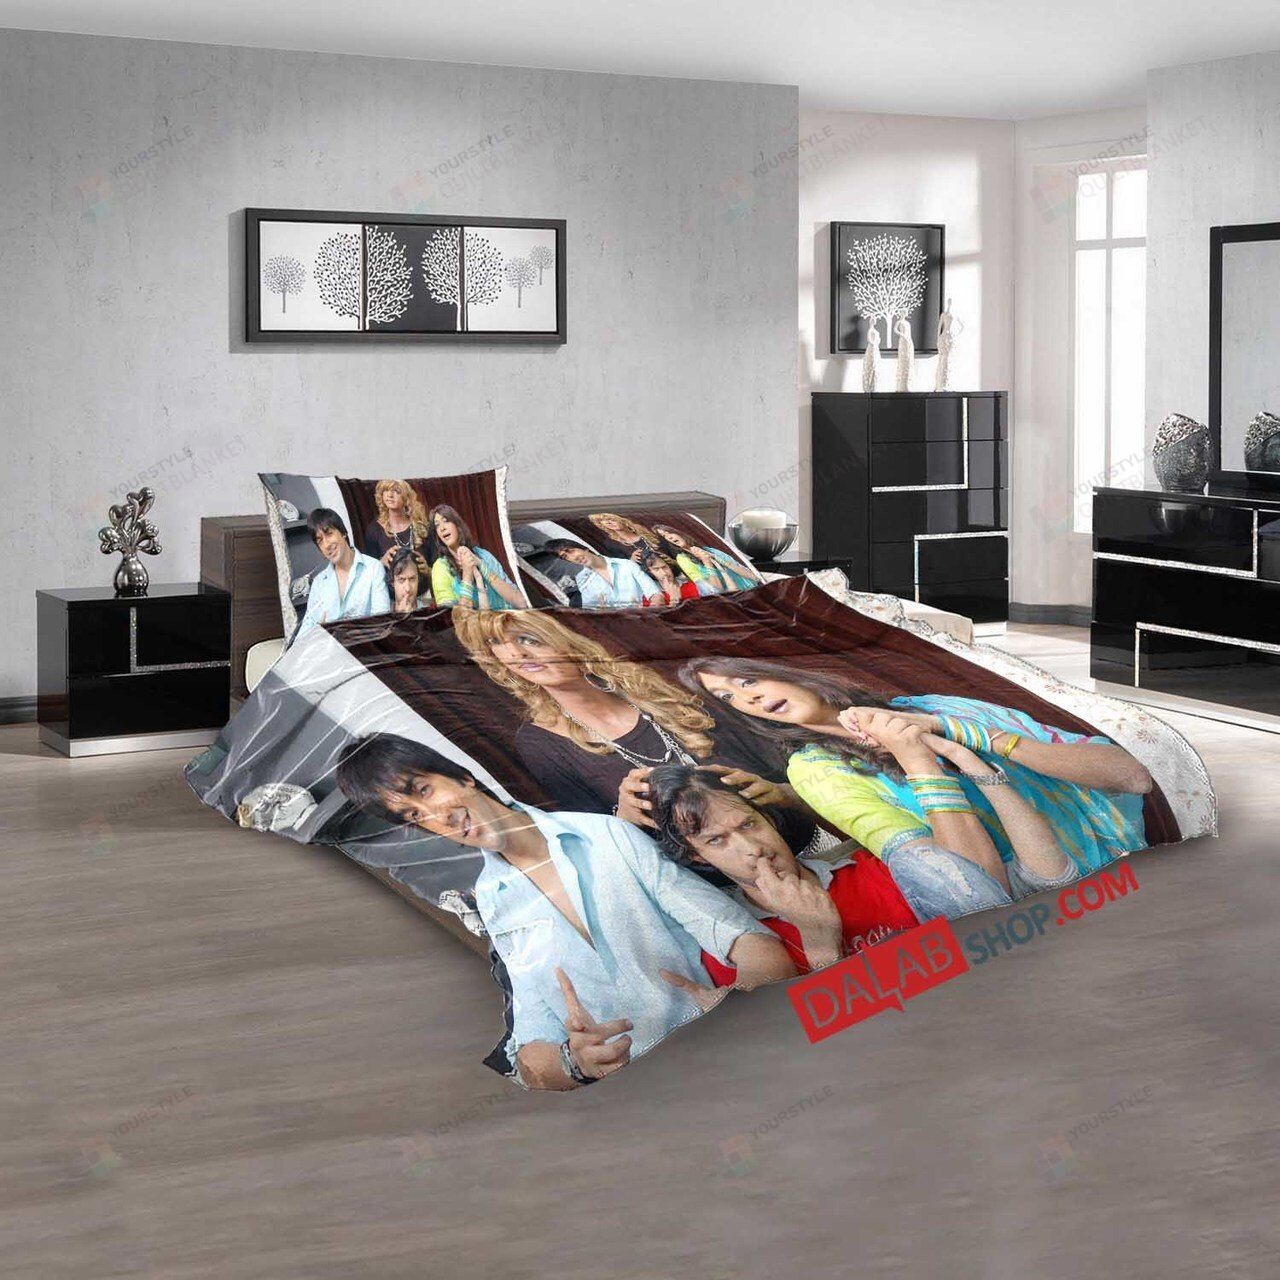 Movie Paying Guests N 3d Duvet Cover Bedroom Sets Bedding Sets